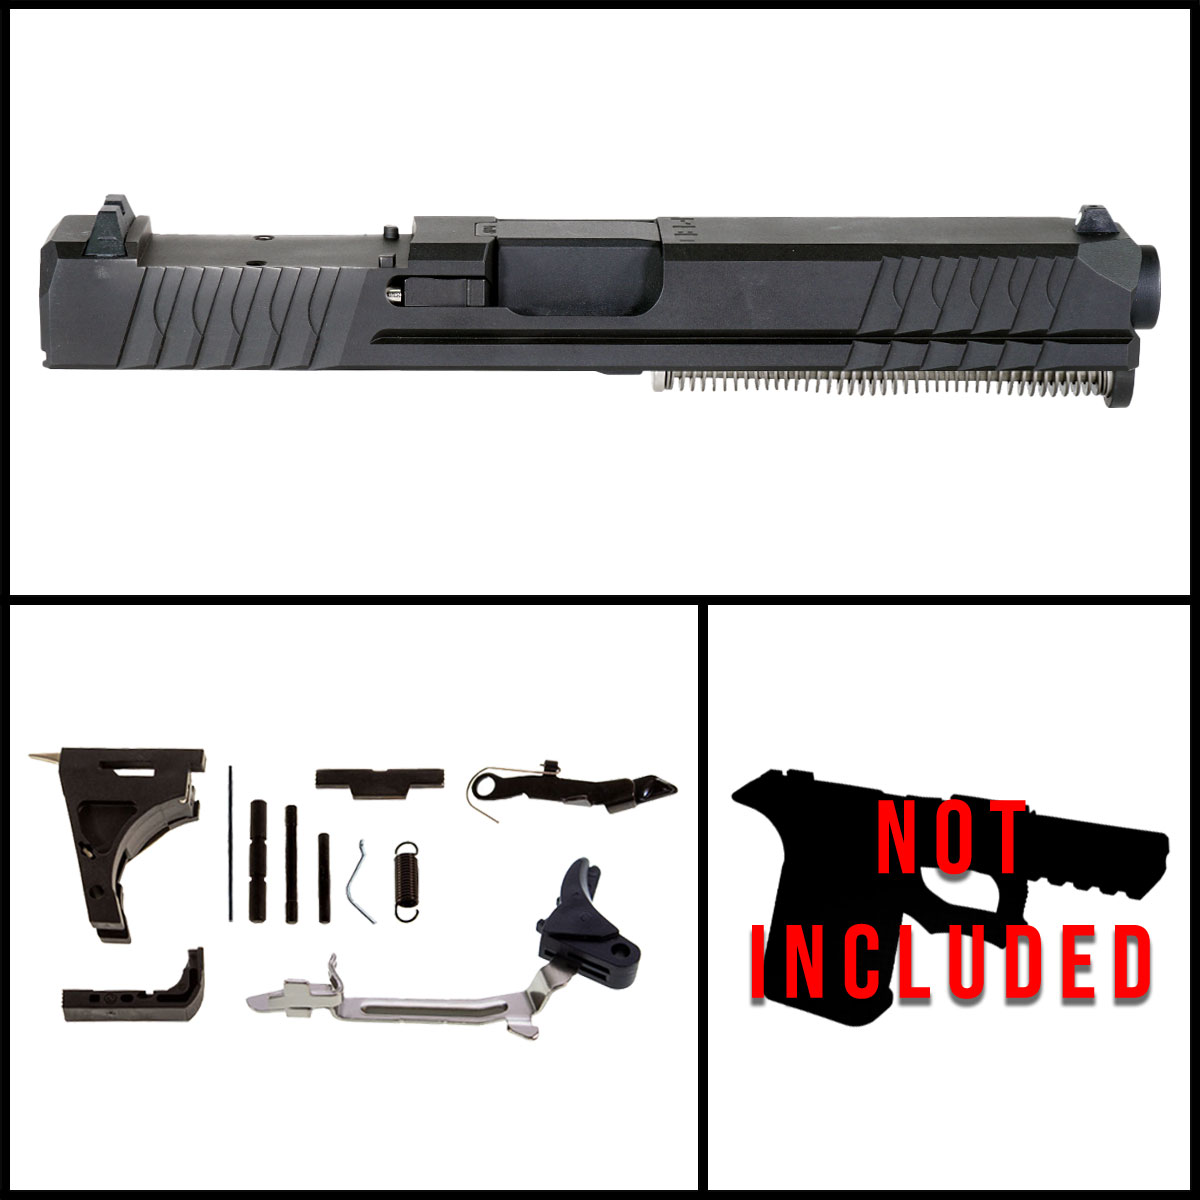 DDS 'Terrafluid' 9mm Full Gun Kit (Everything minus Frame) - Glock 17 Gen 1-3 Compatible